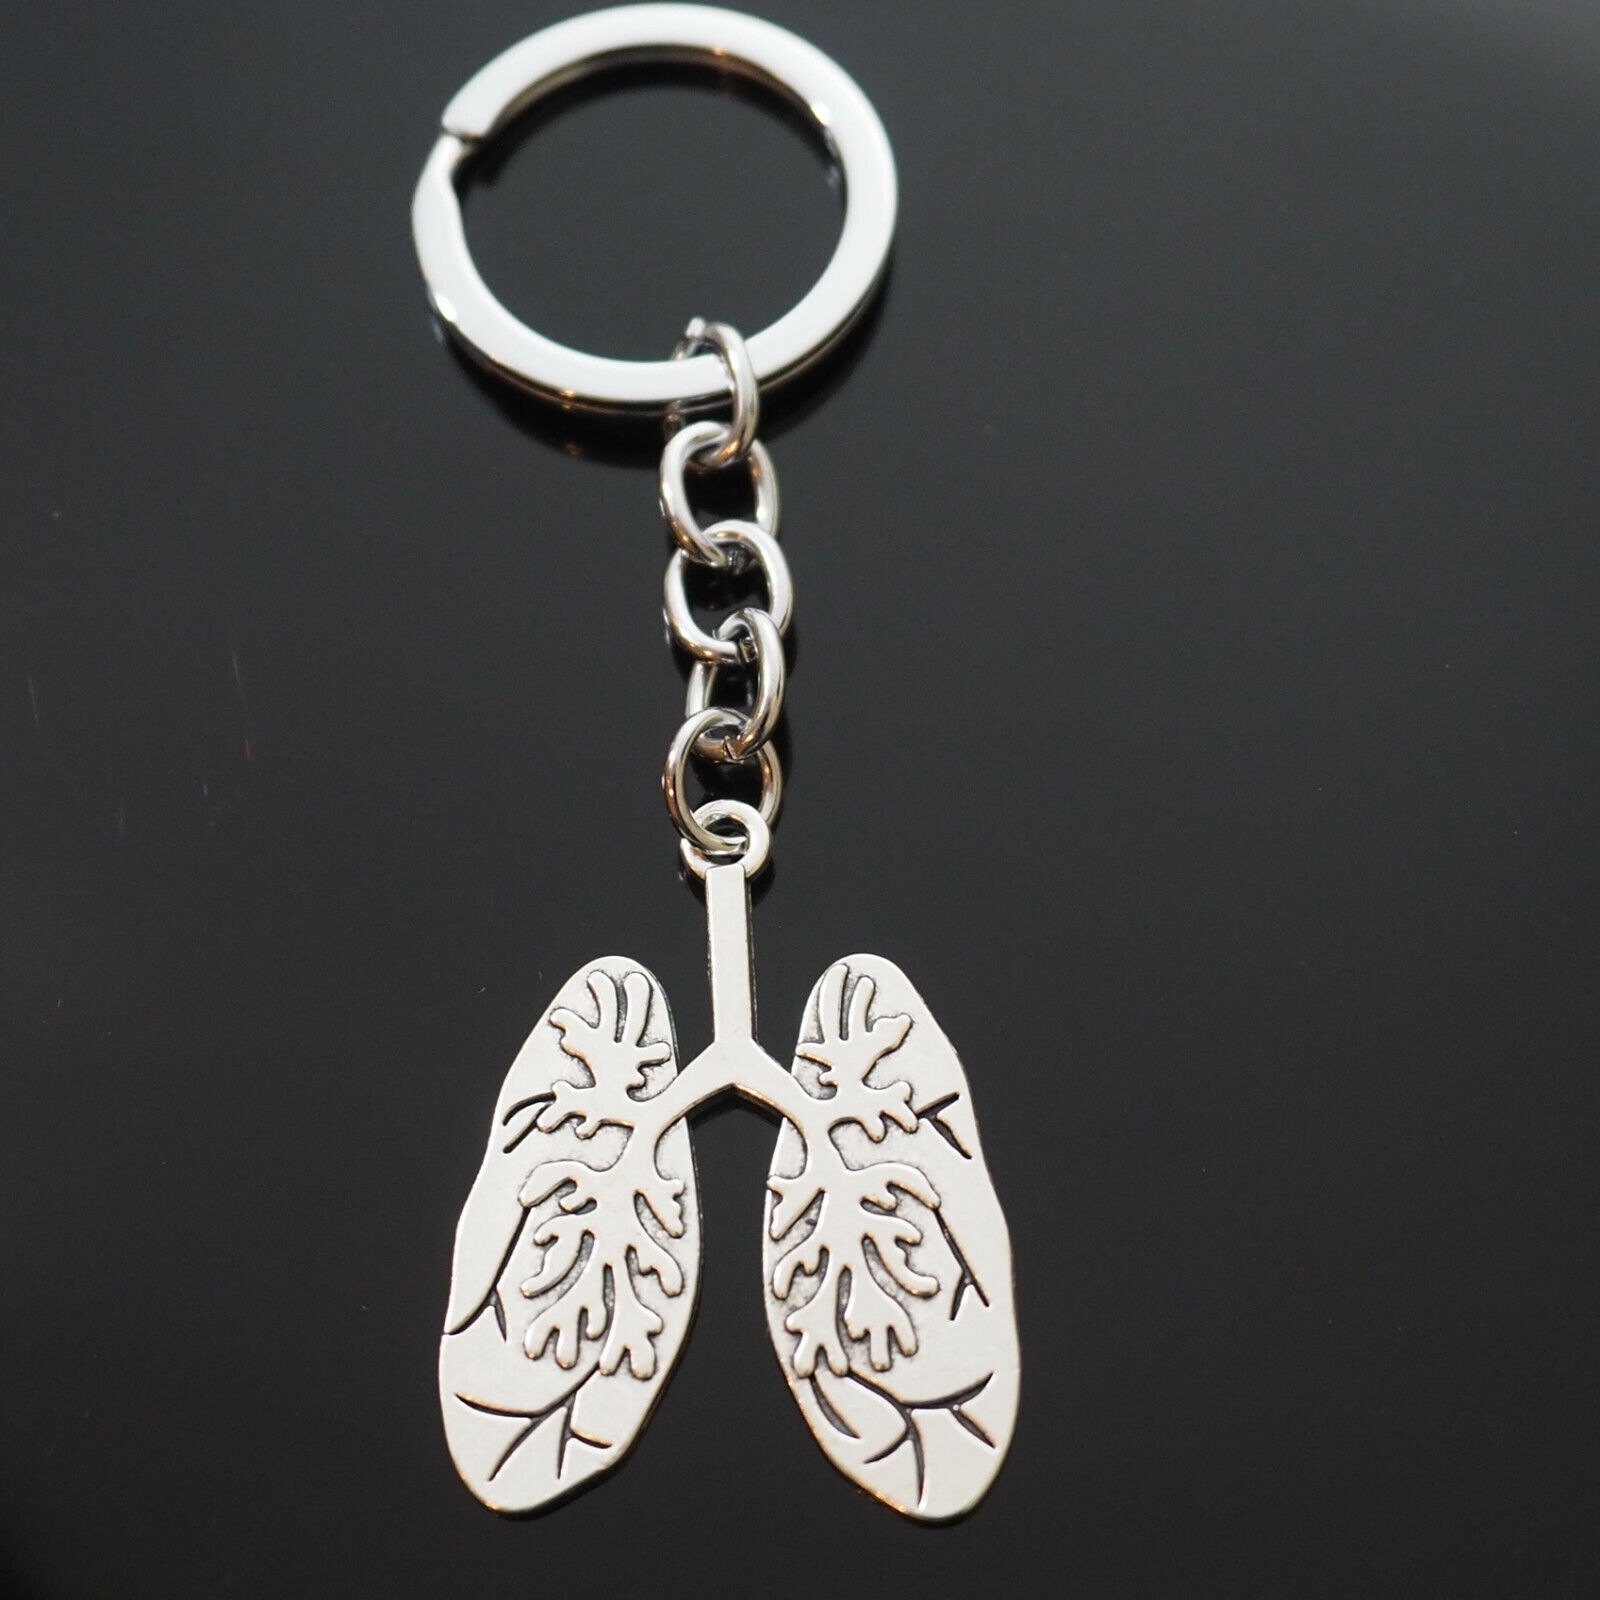 Lungs Body Organs Blood Vessels Breathe Pendant Charm Keychain Key Chain Gift